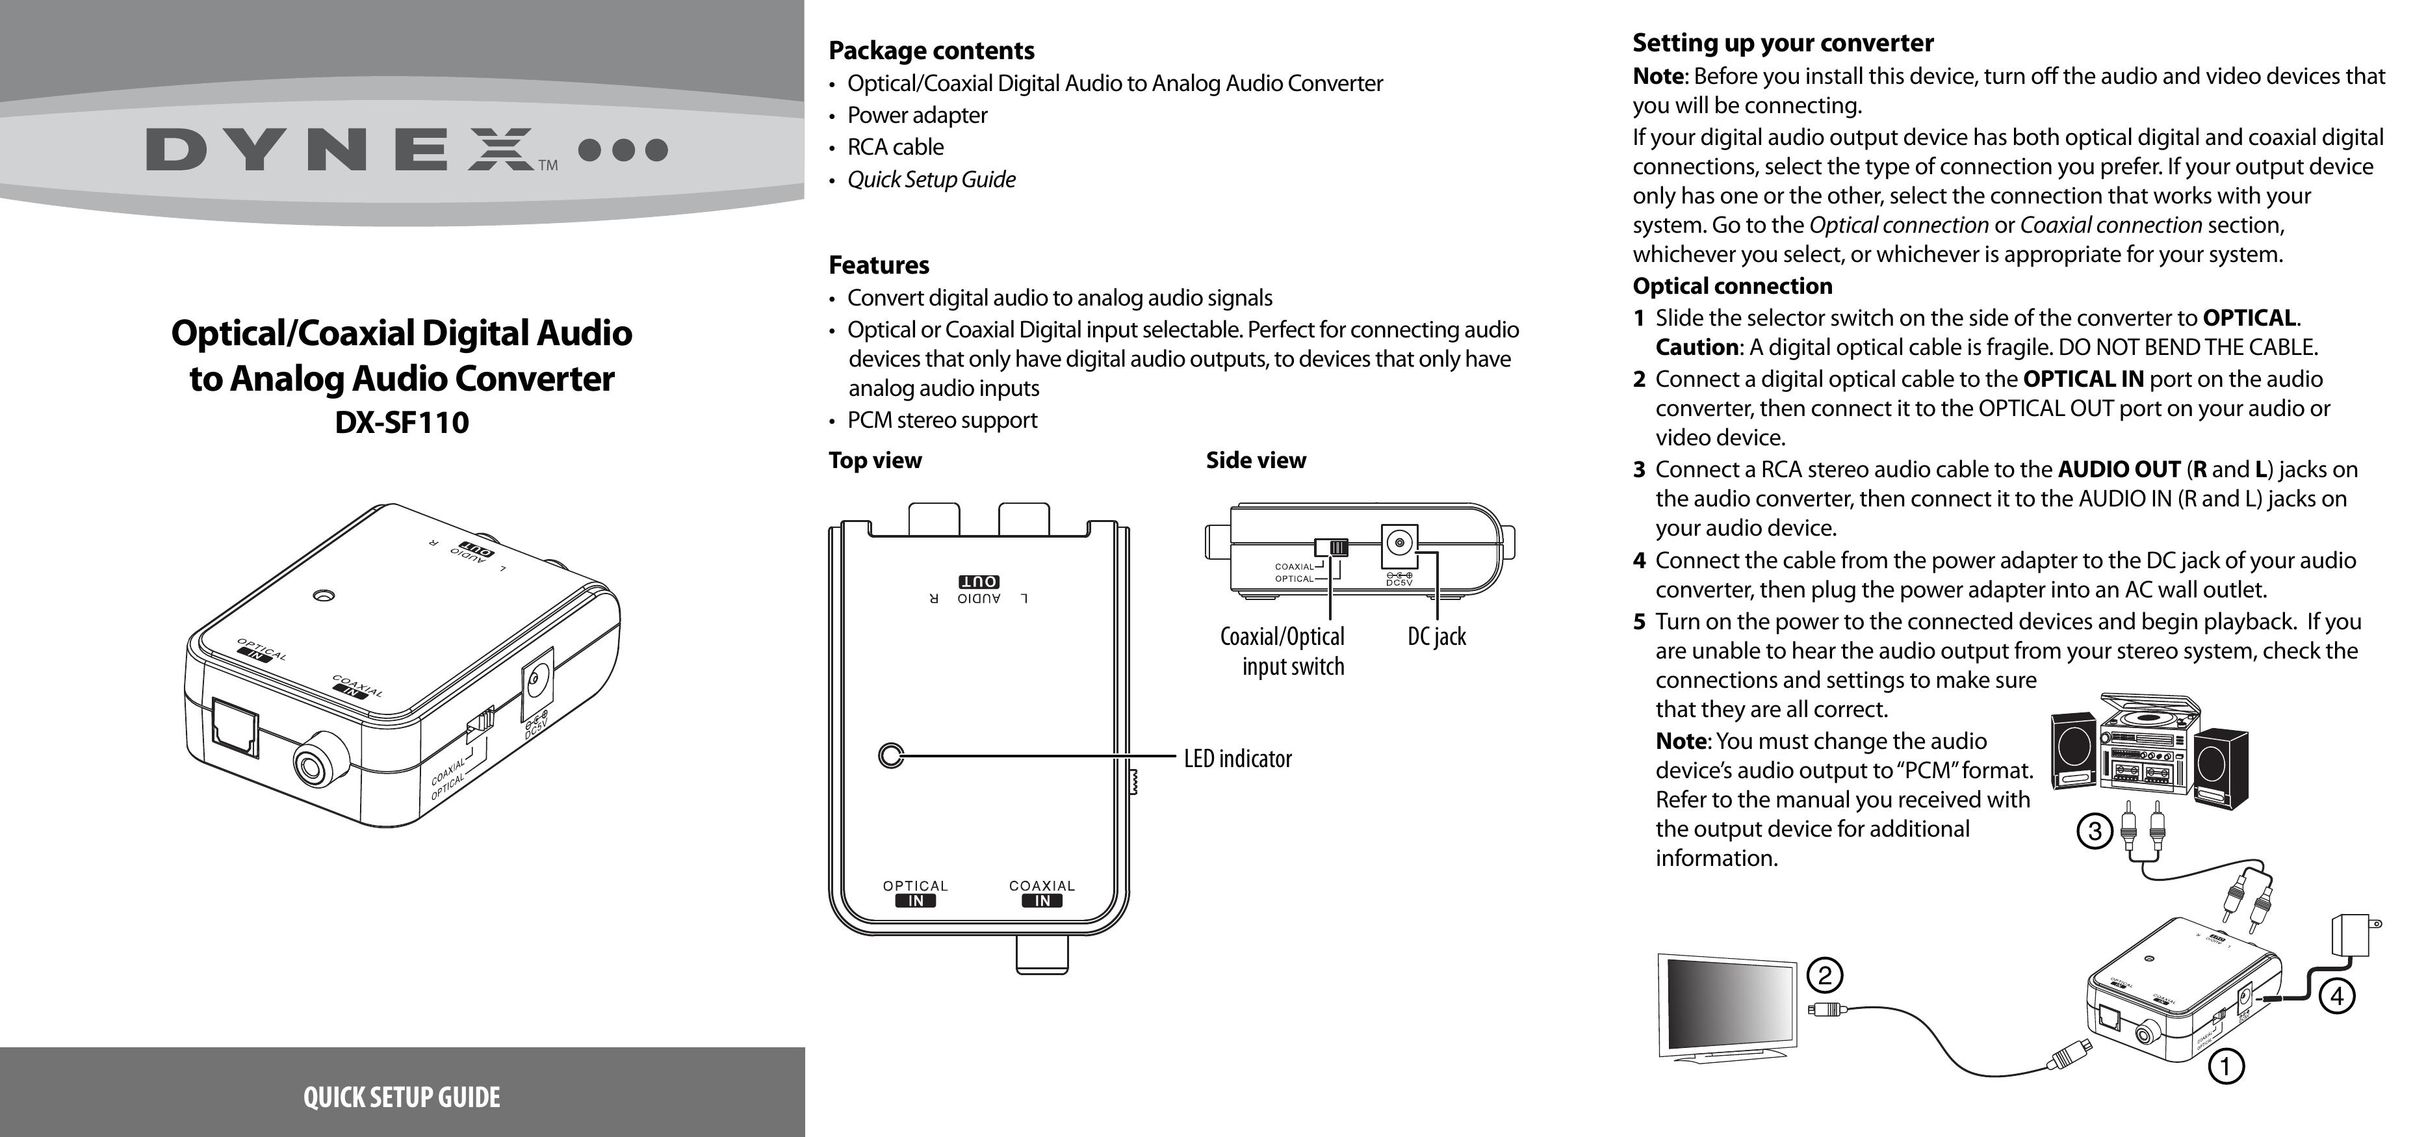 Dynex DX-SF110 TV Converter Box User Manual